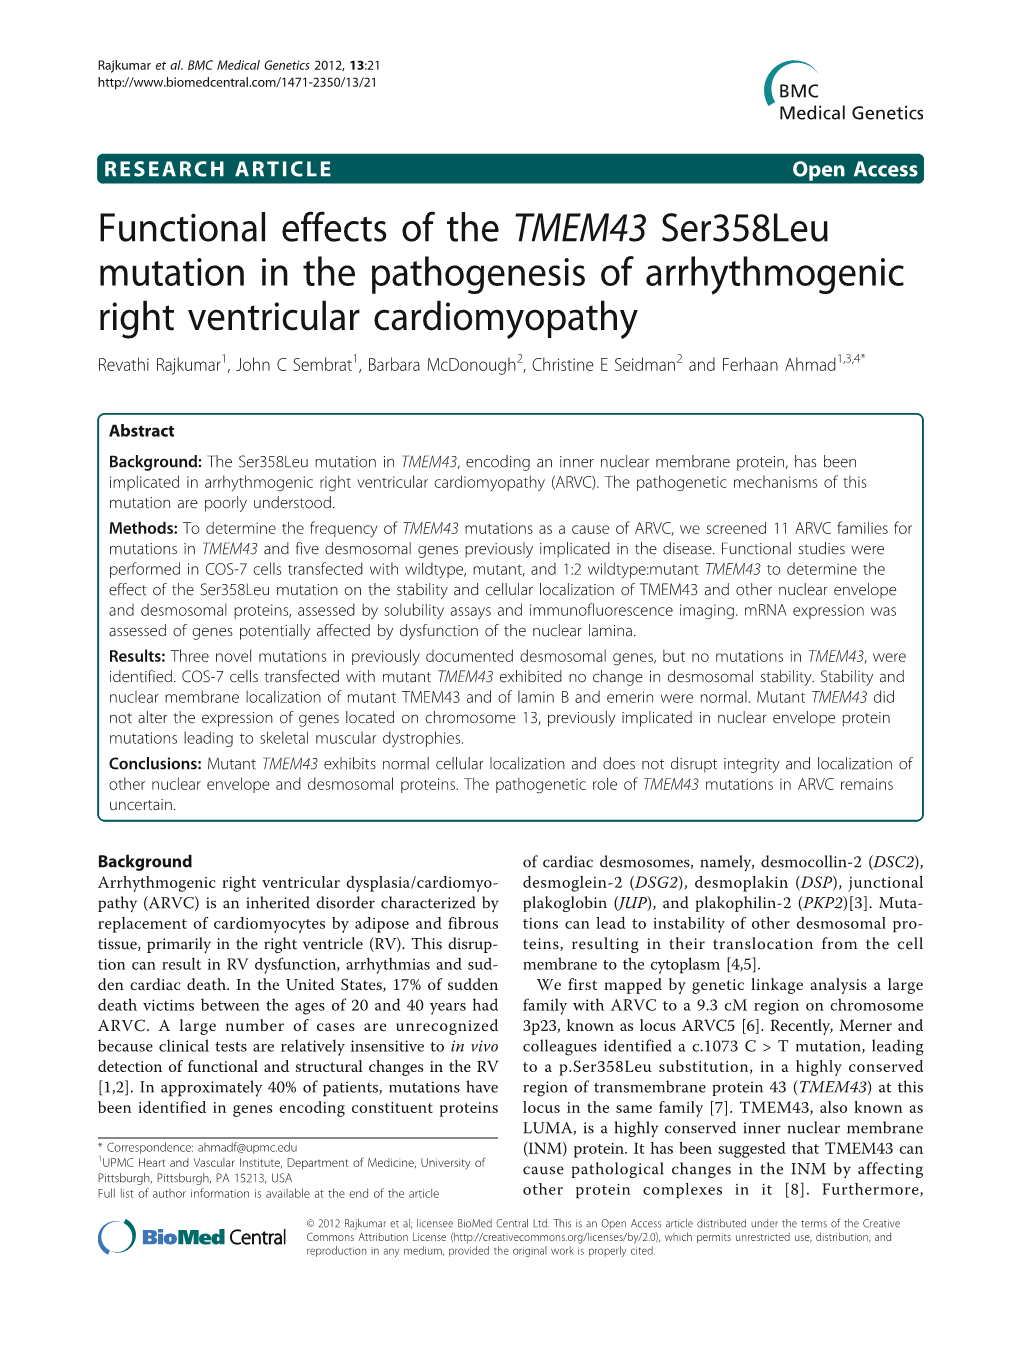 Functional Effects of the TMEM43 Ser358leu